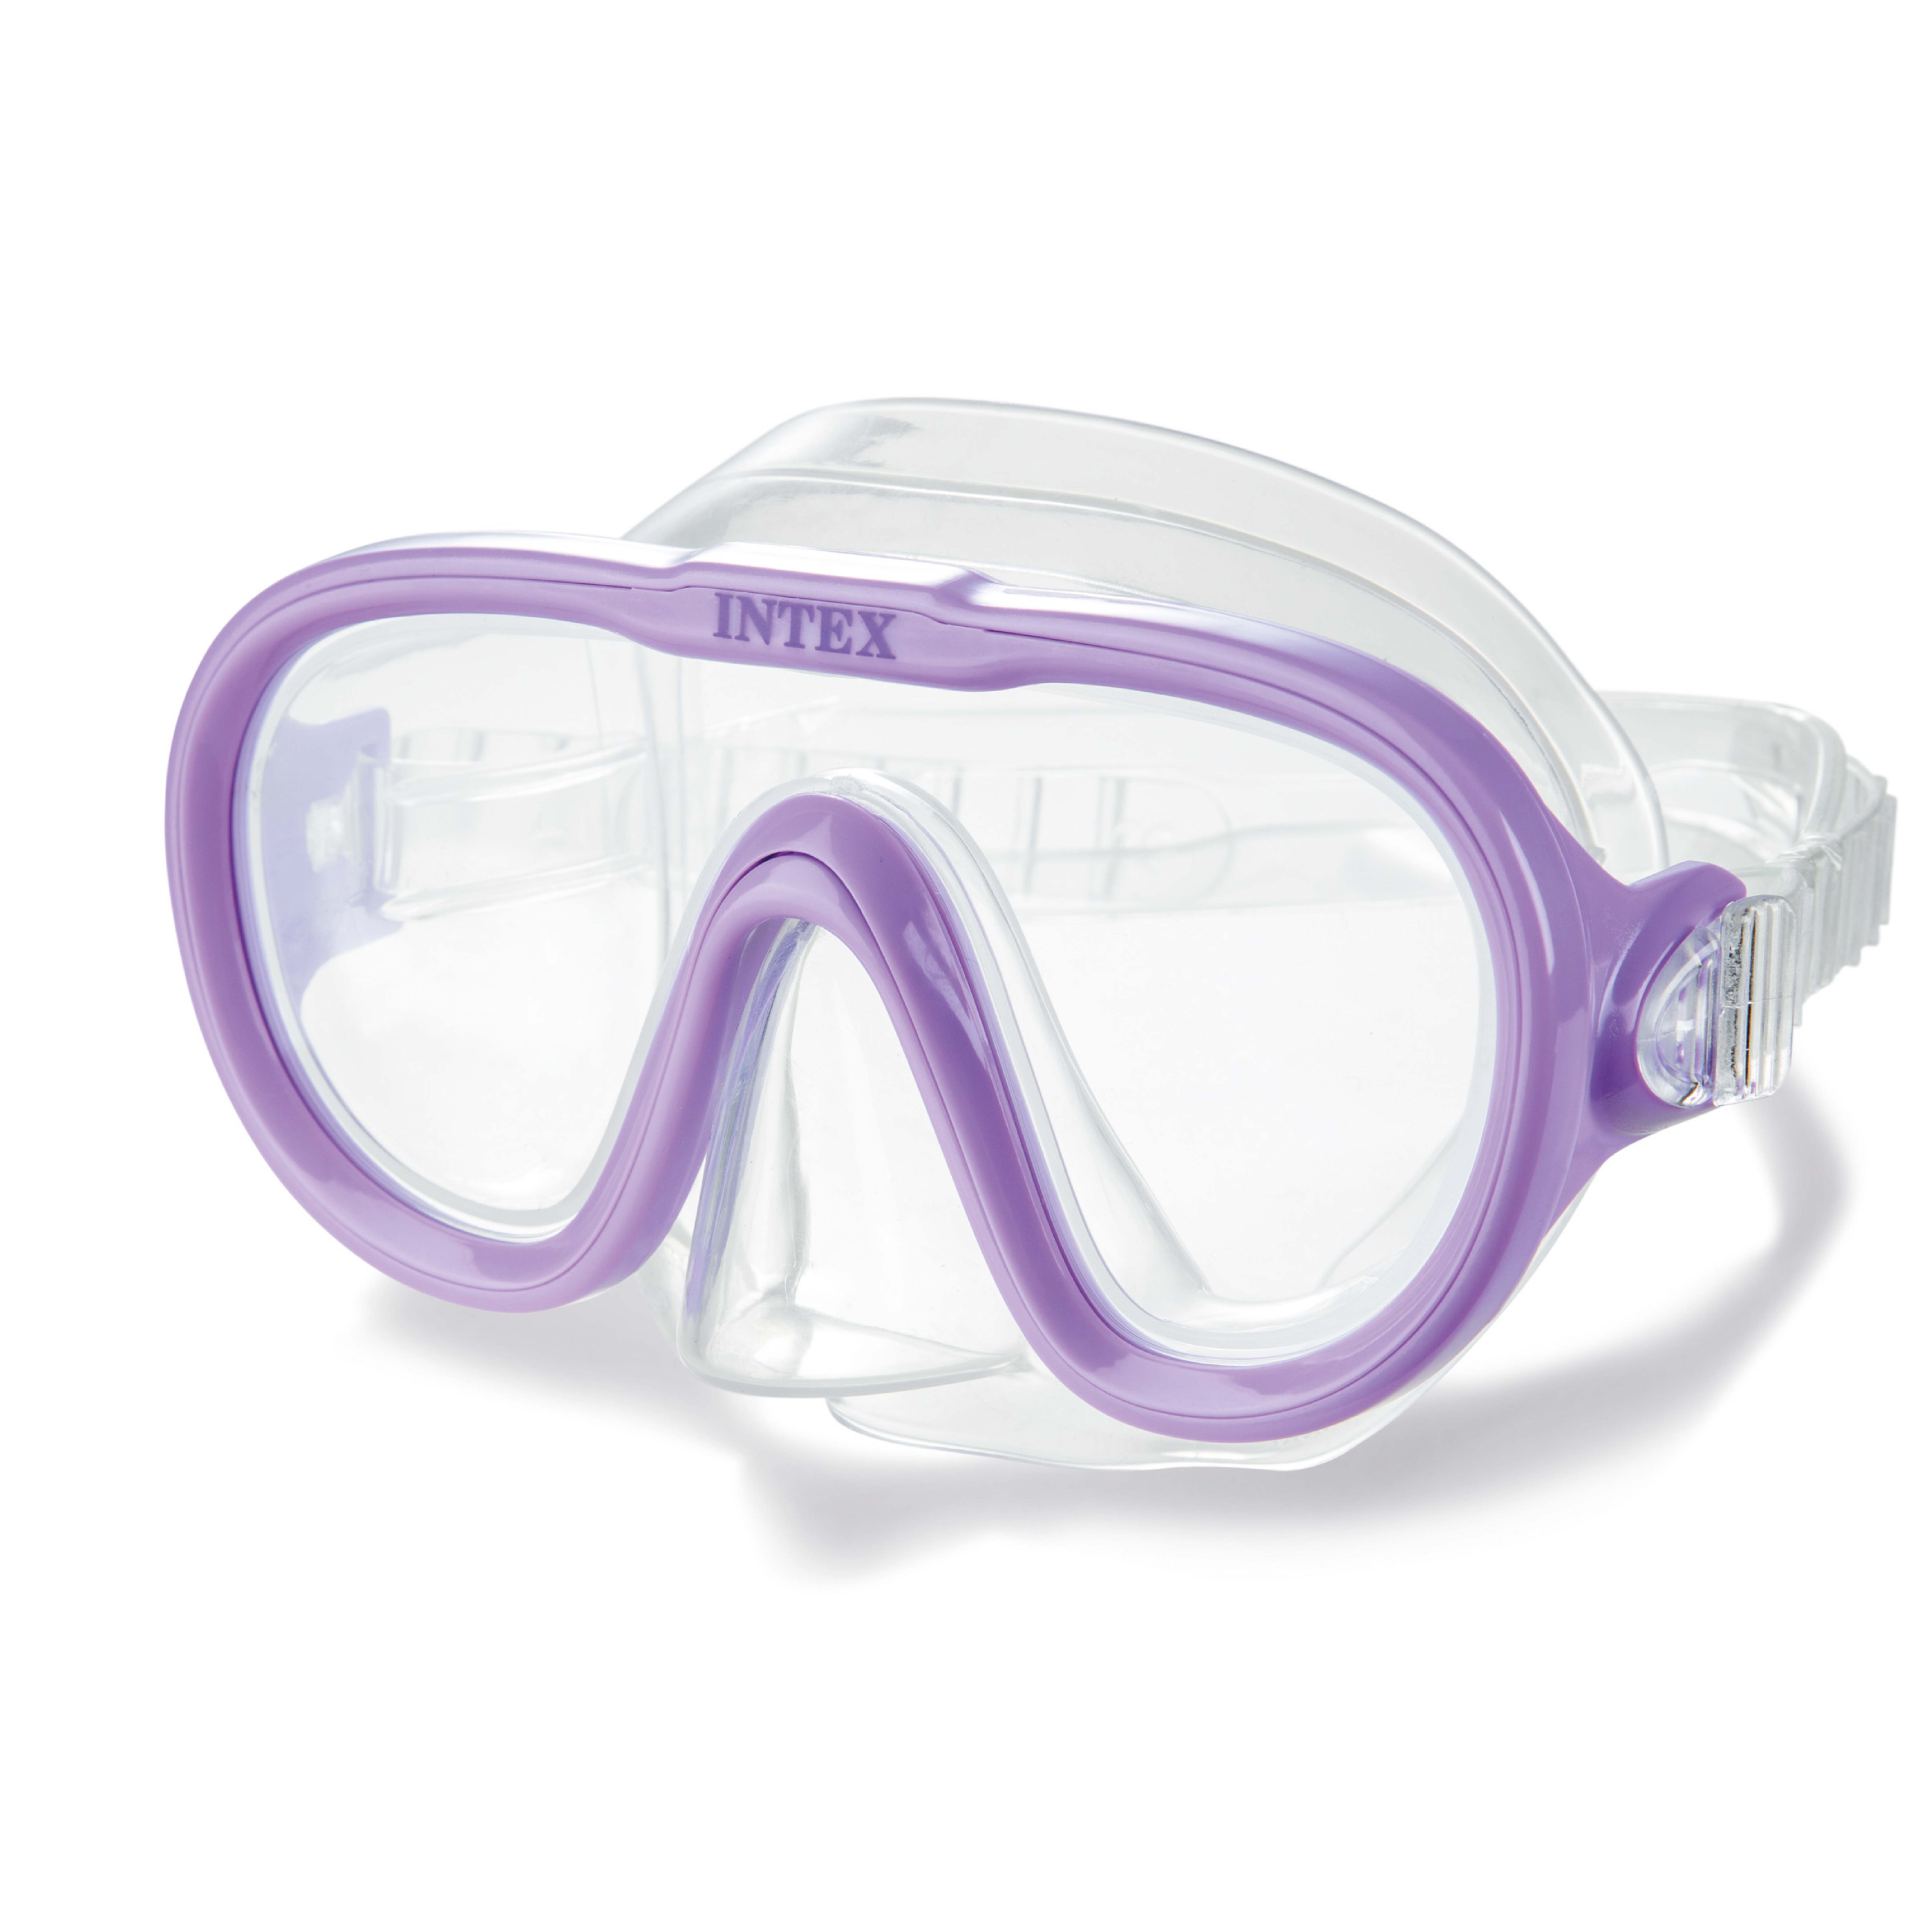 Intex sea scan swim masks - Paars